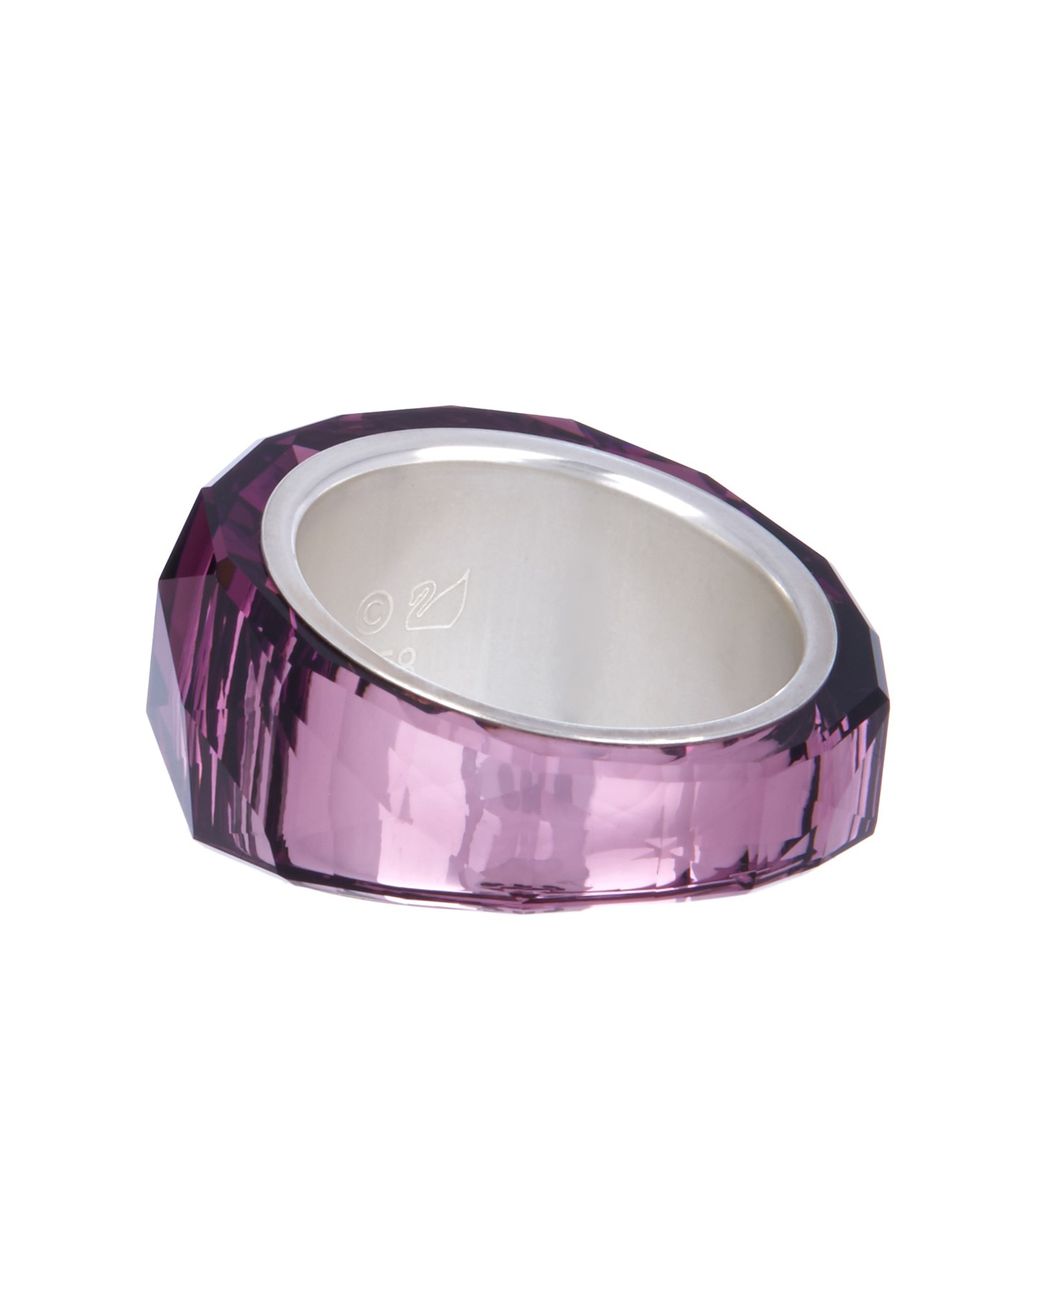 Swarovski Nirvana Petite Ring - Size 58 (us 8) in Purple | Lyst